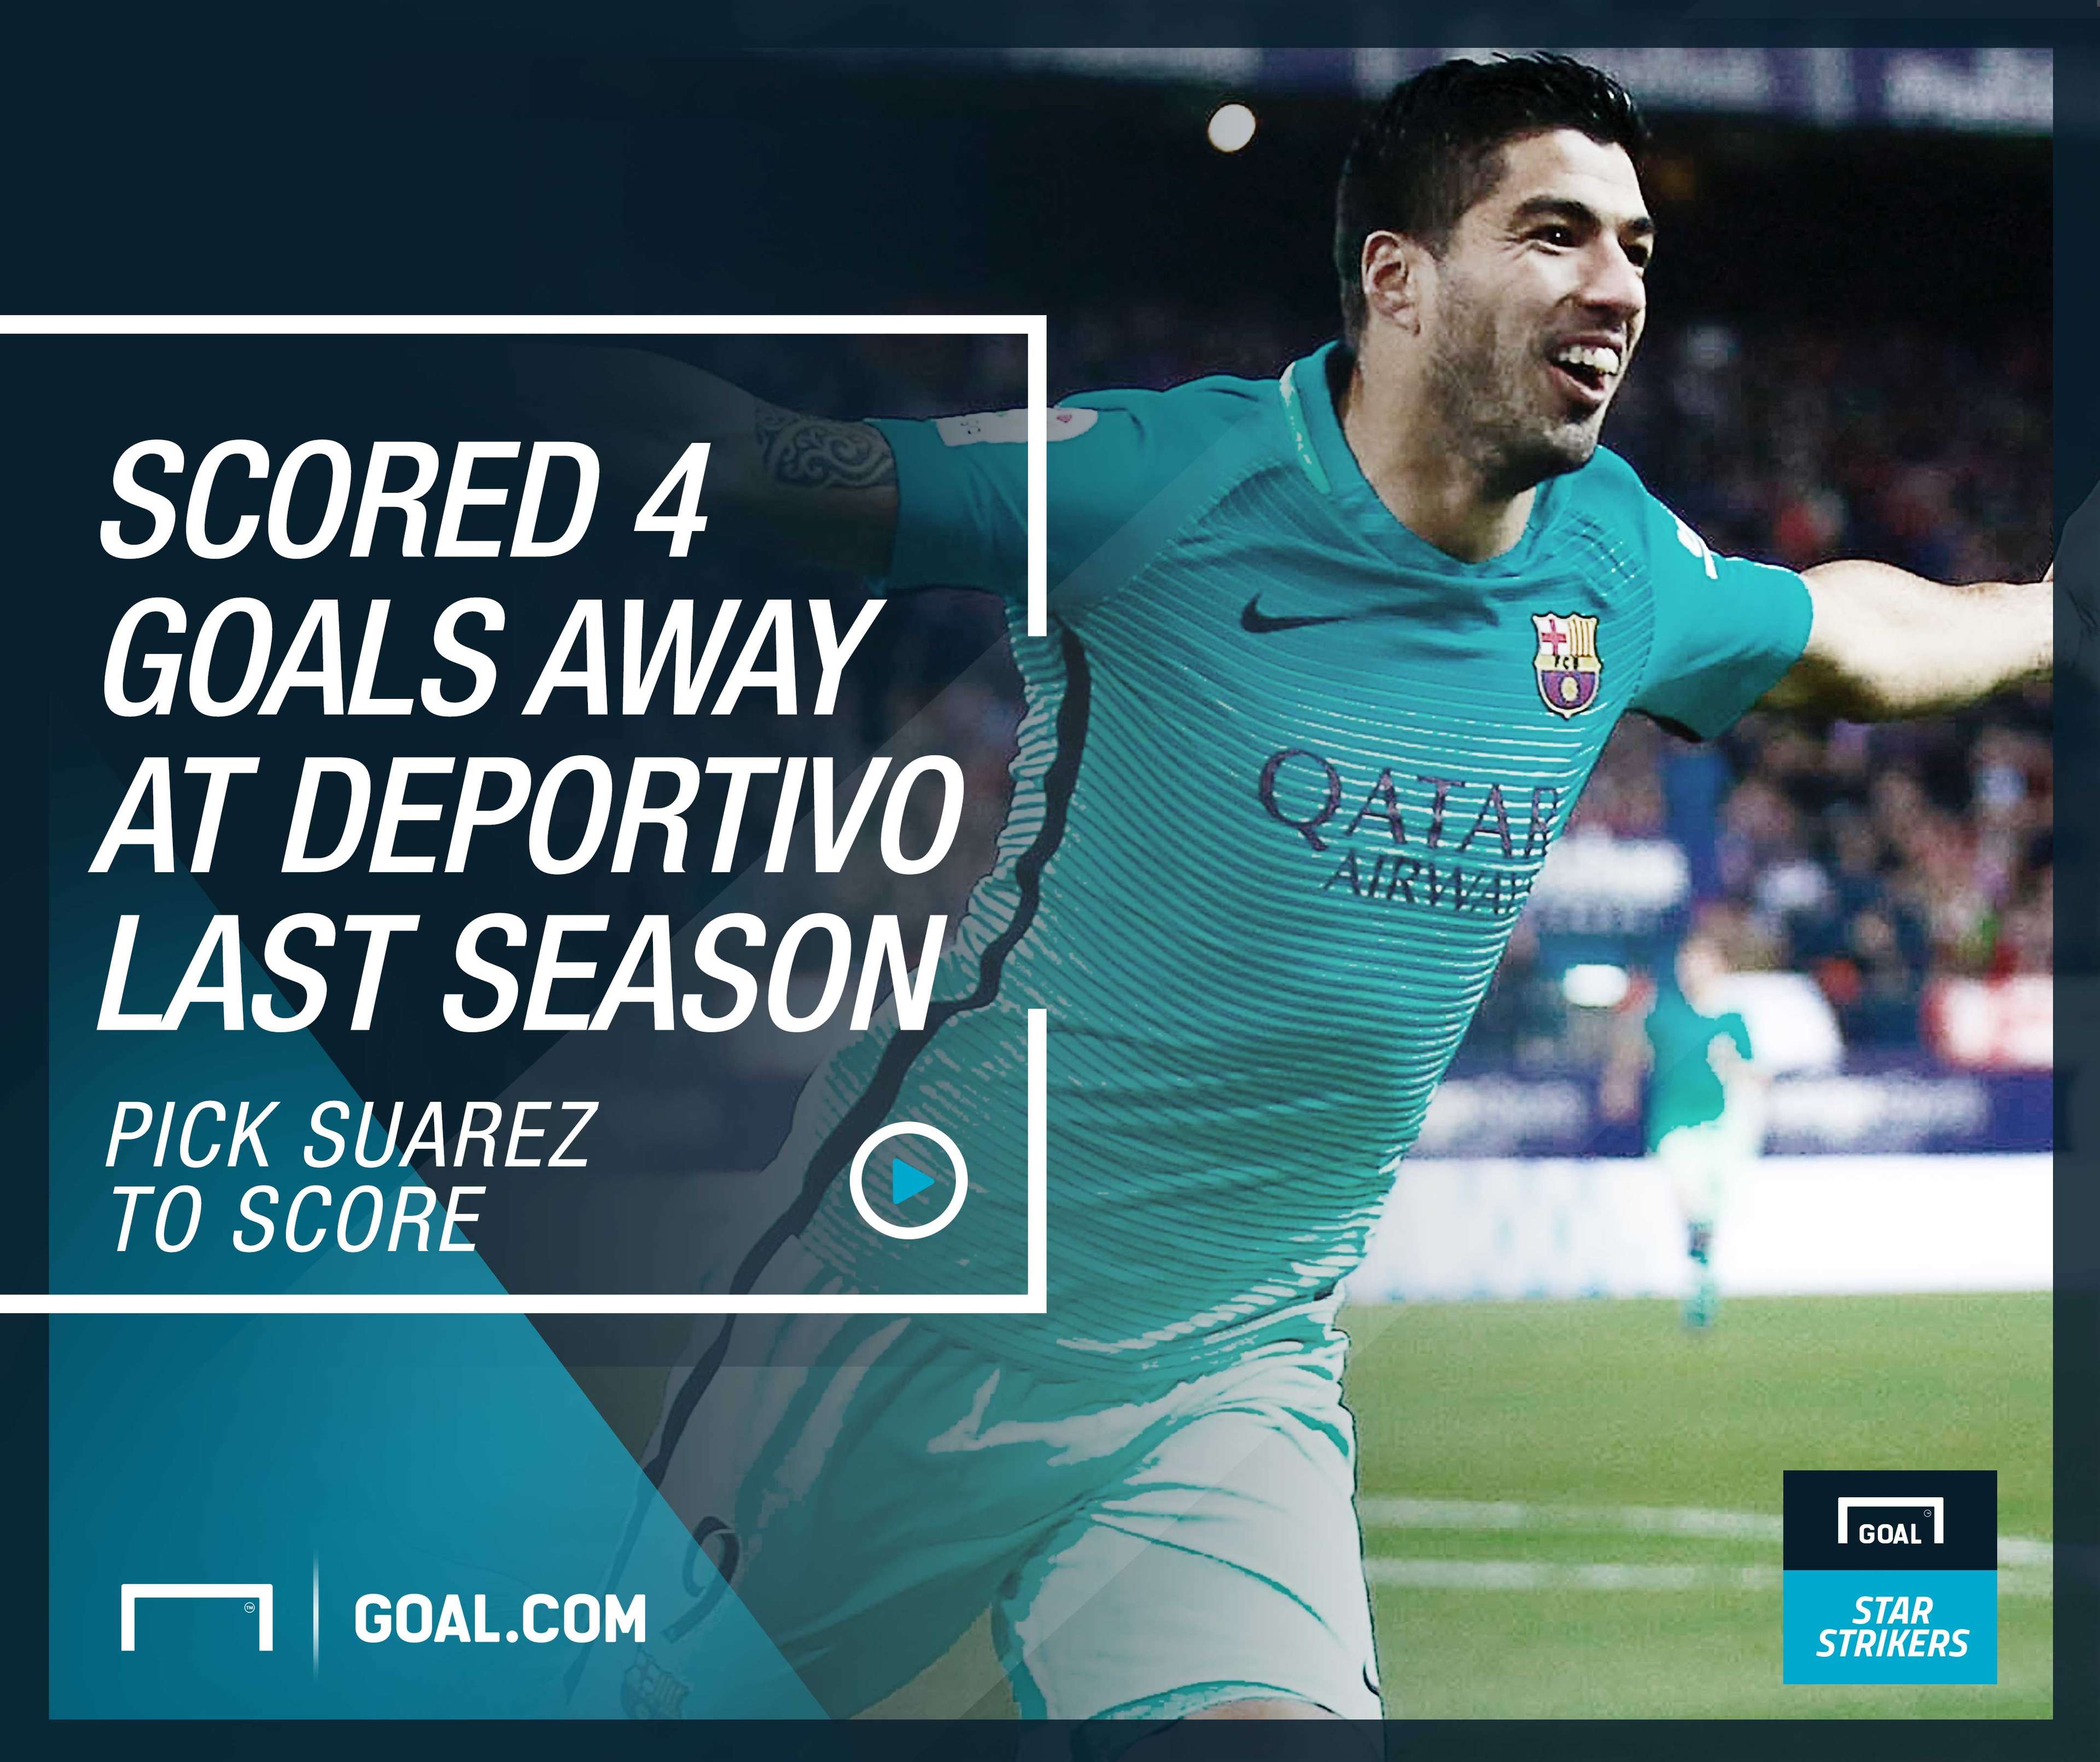 Suarez, Goal Star Strikers